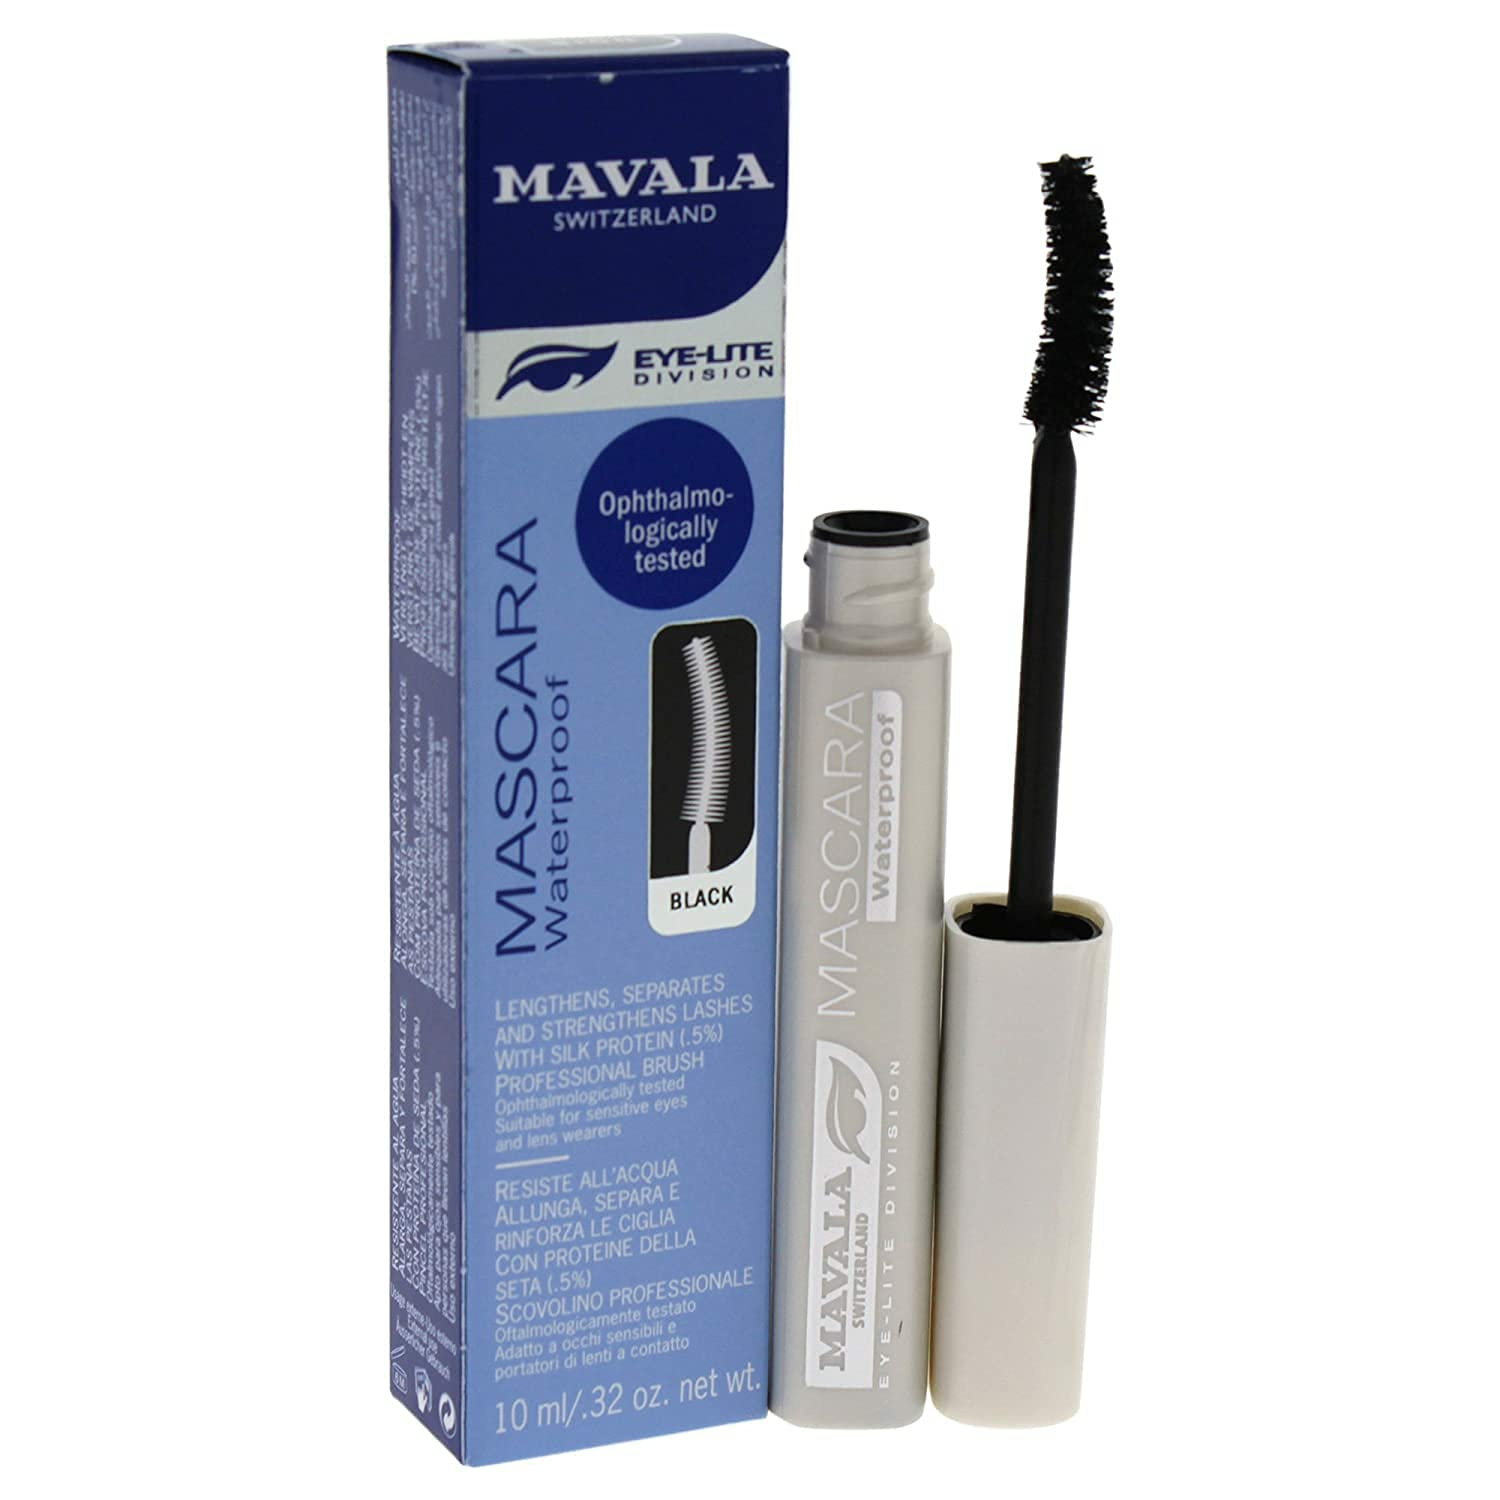 Mavala Mascara Waterproof schwarz